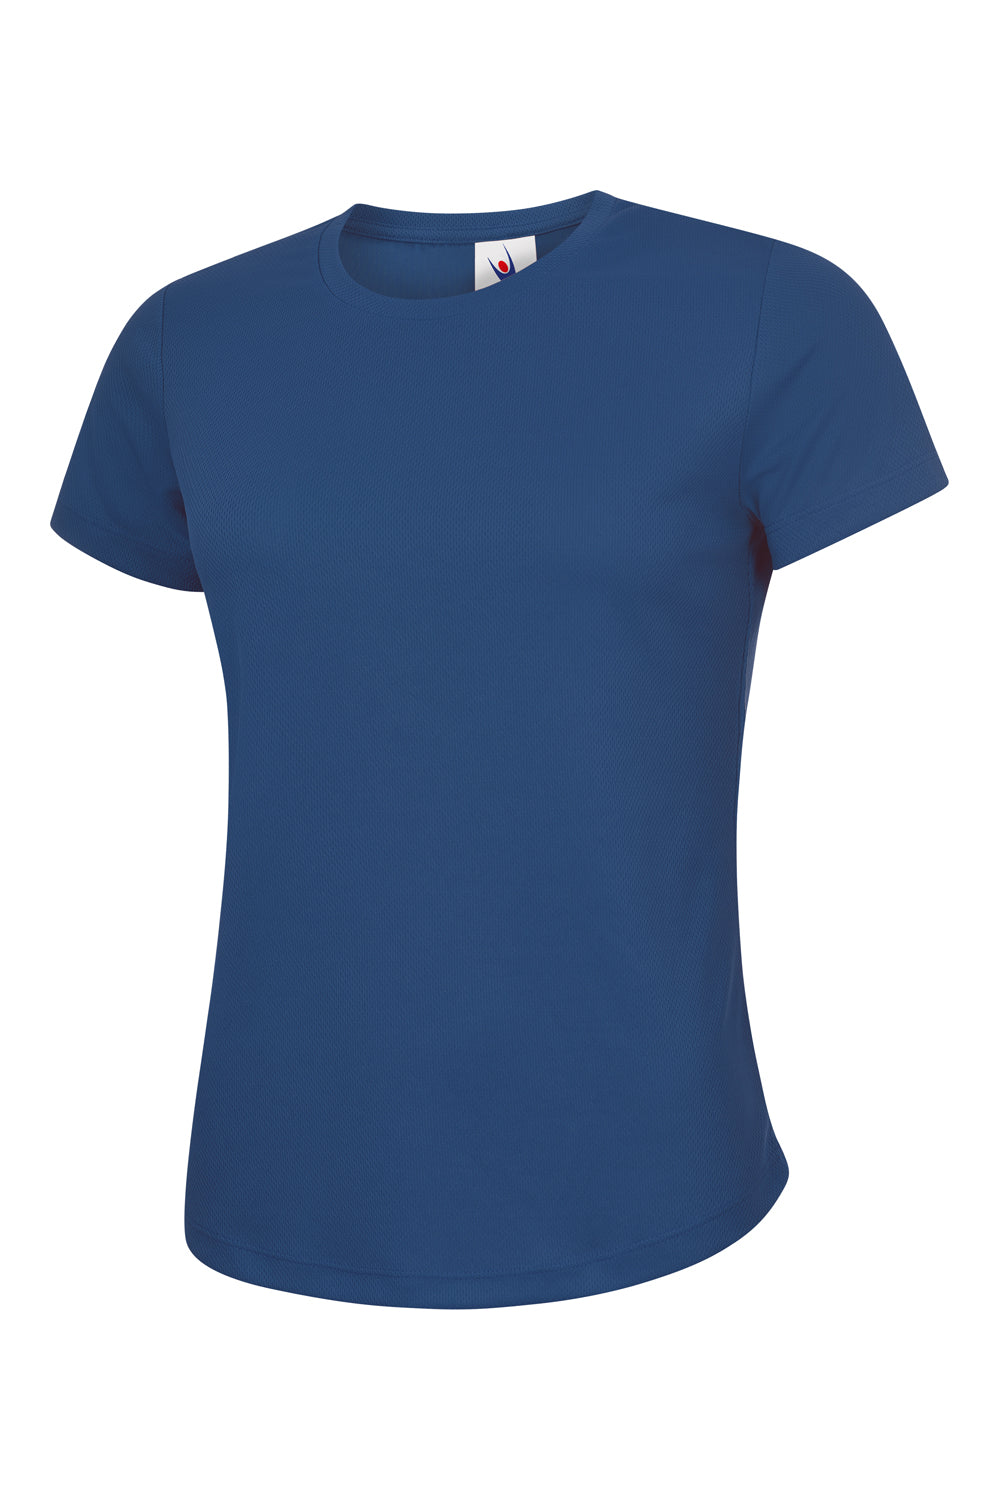 Uneek Ladies Ultra Cool T Shirt UC316 - Royal